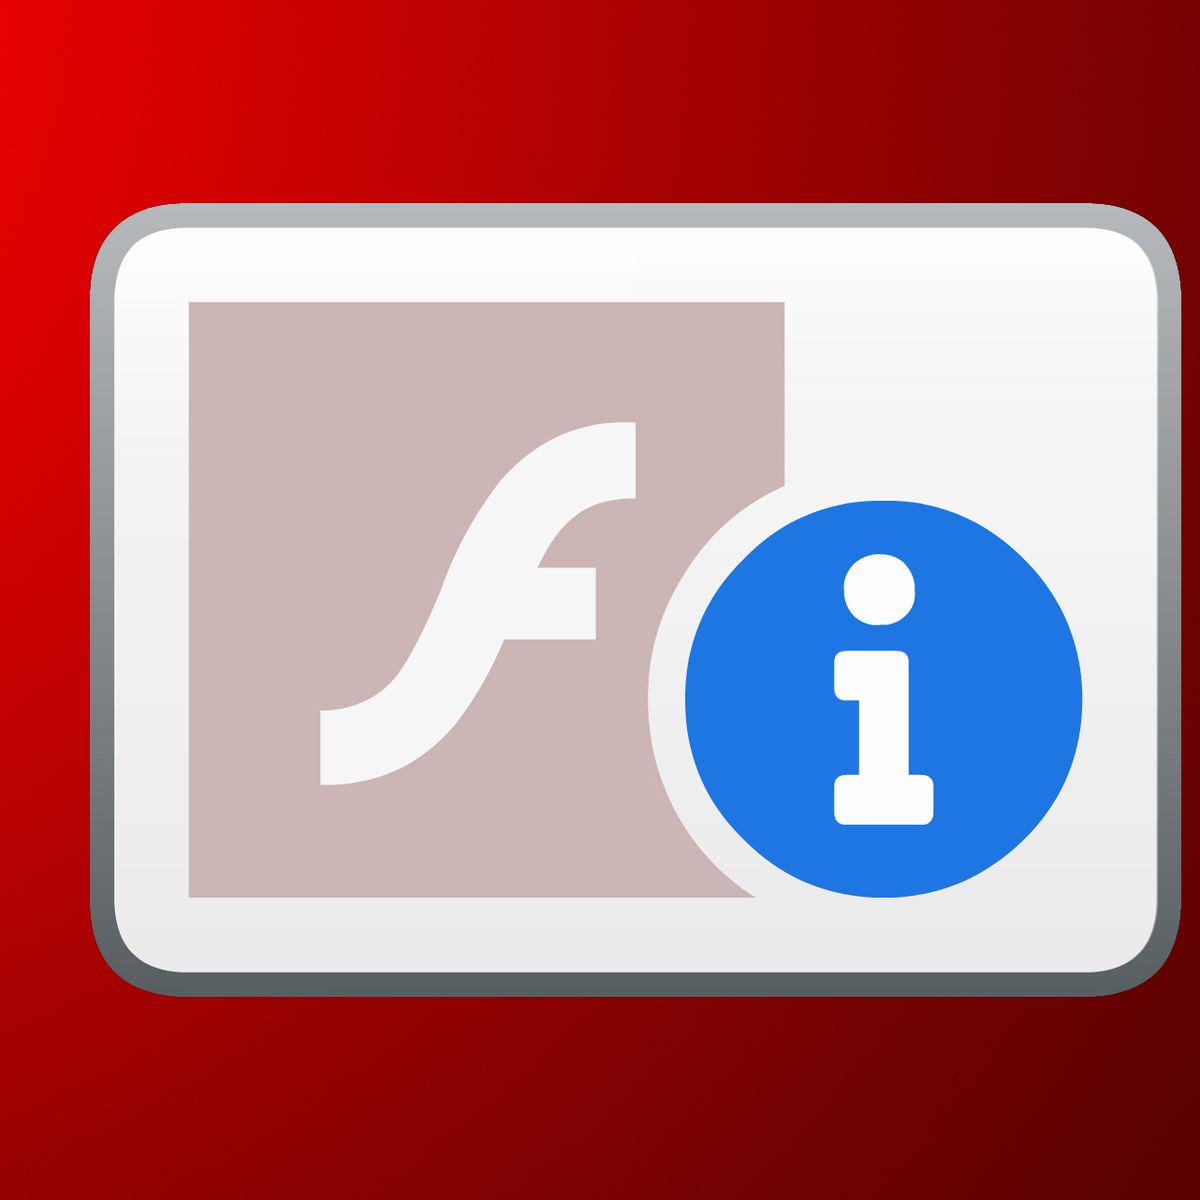 uninstall flash player mac osx